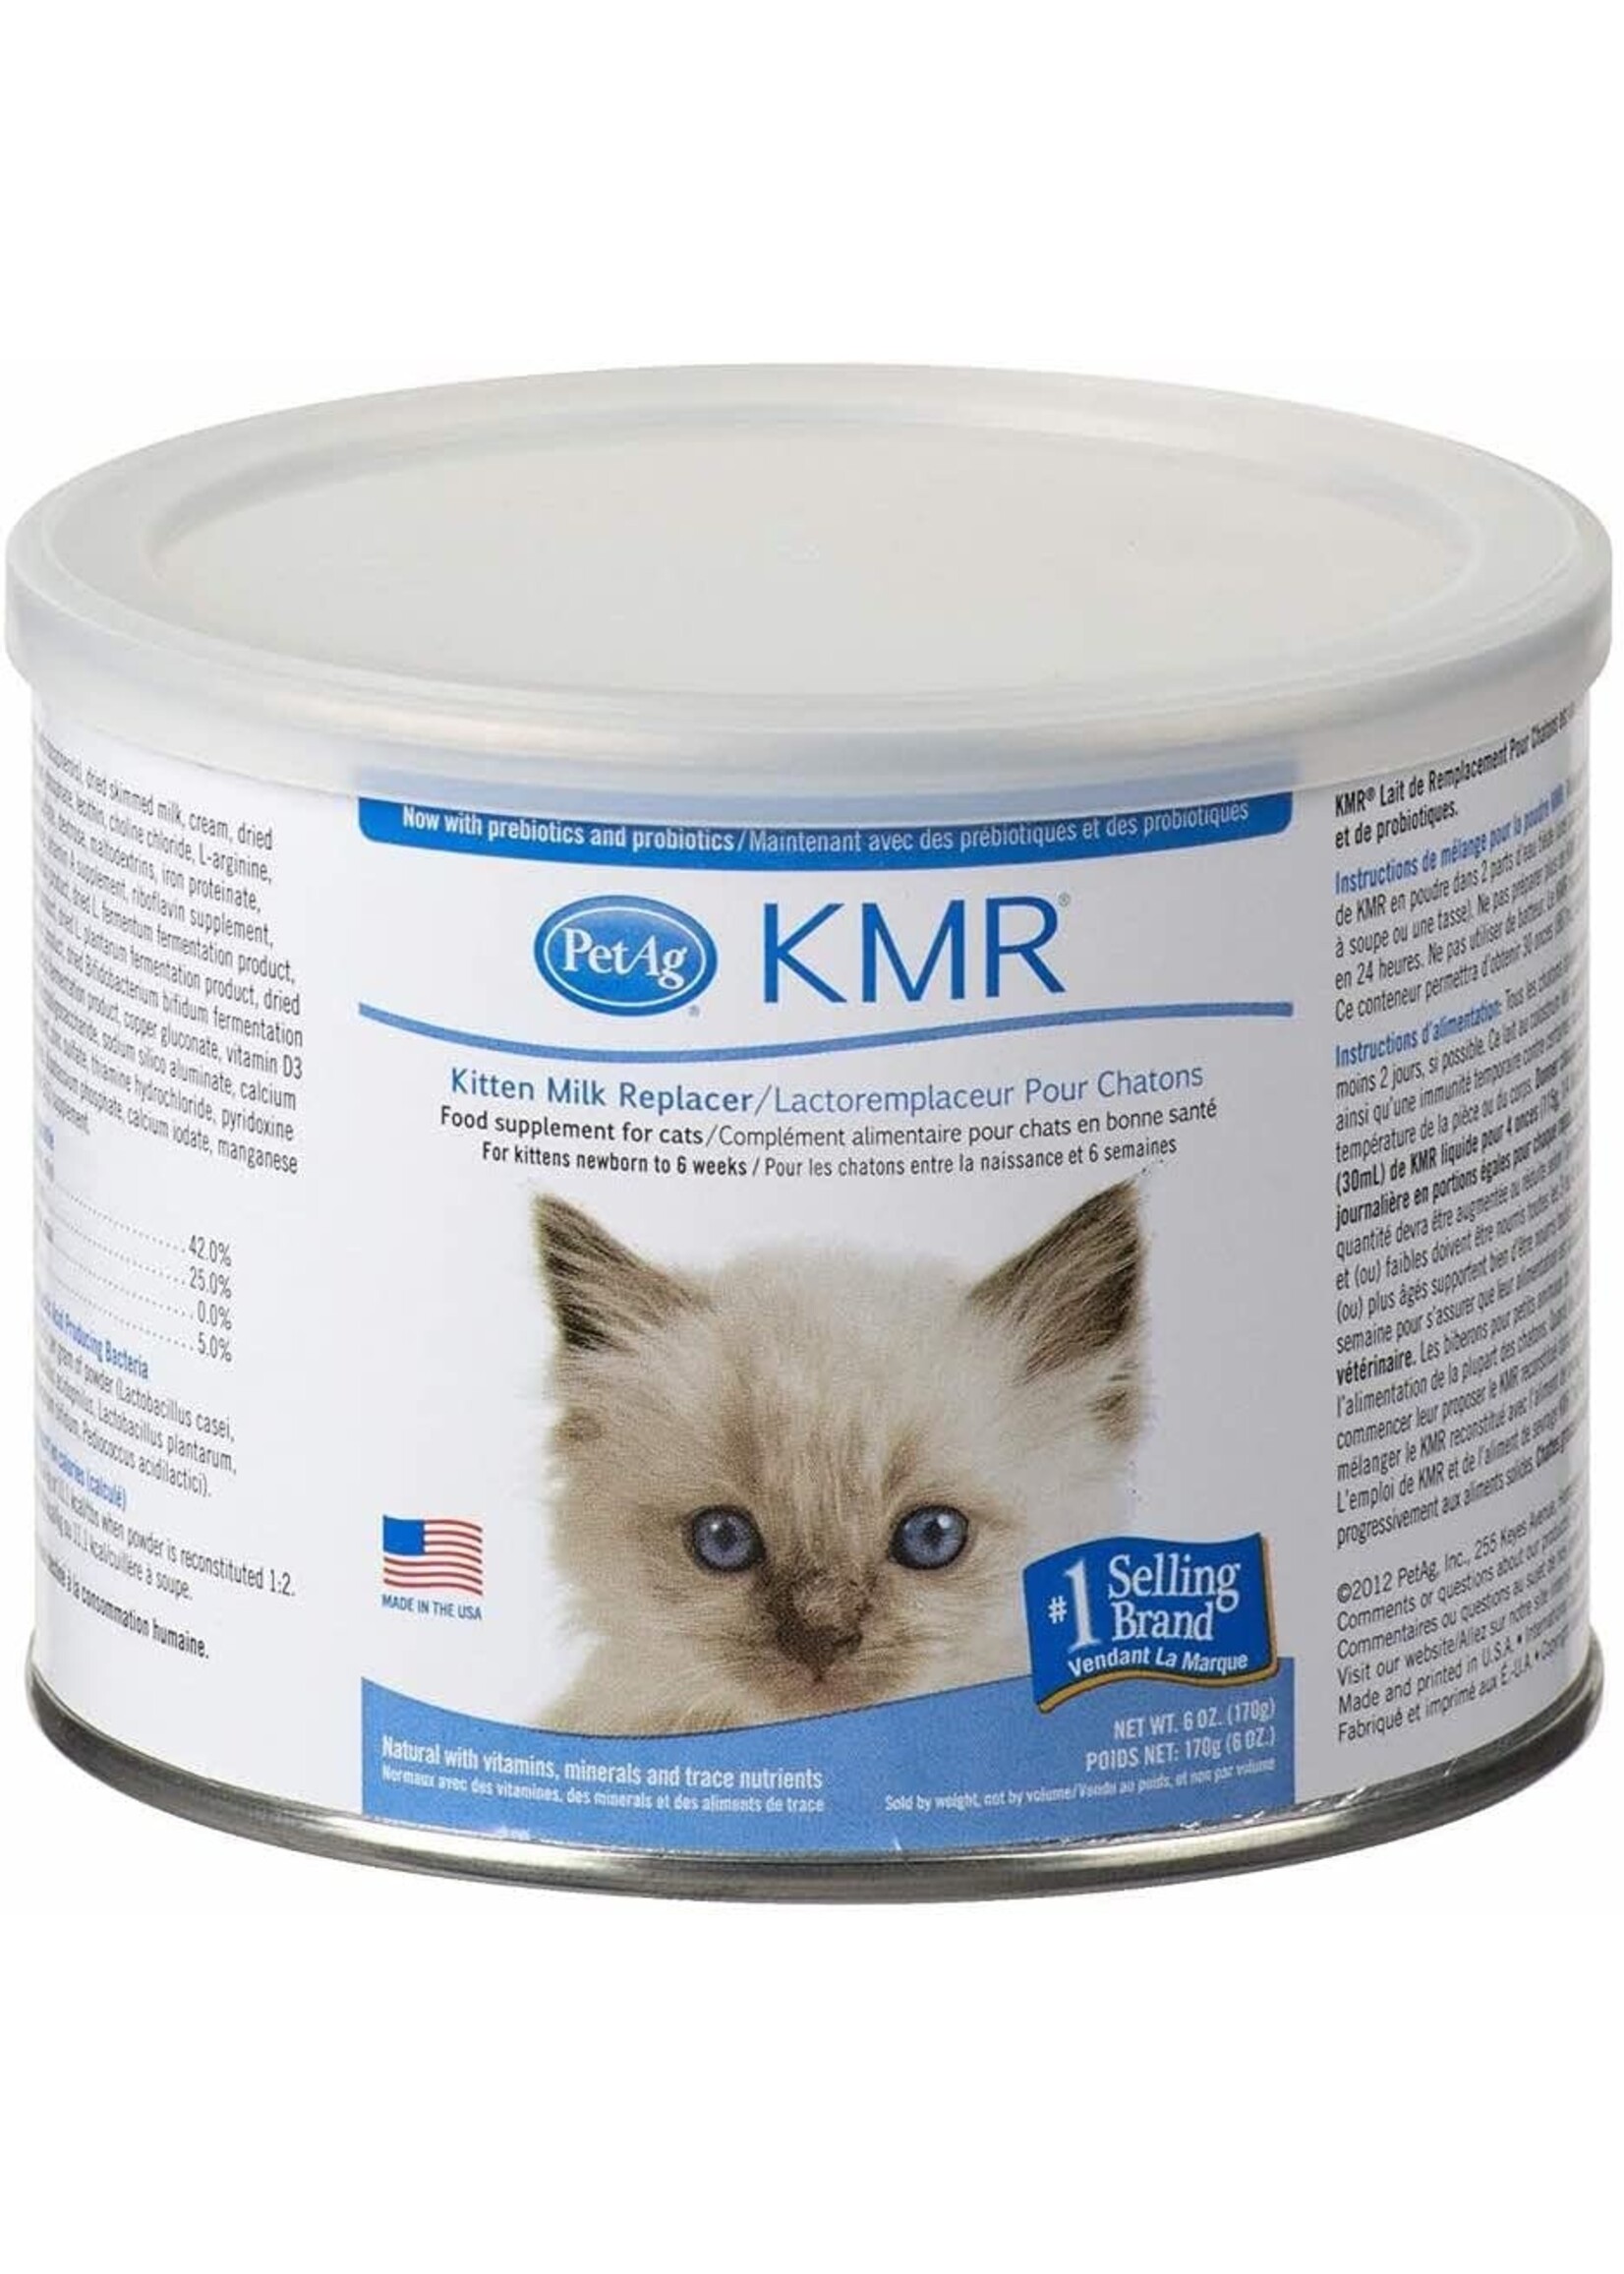 Petag PetAg Kitten Milk Replacer Powder